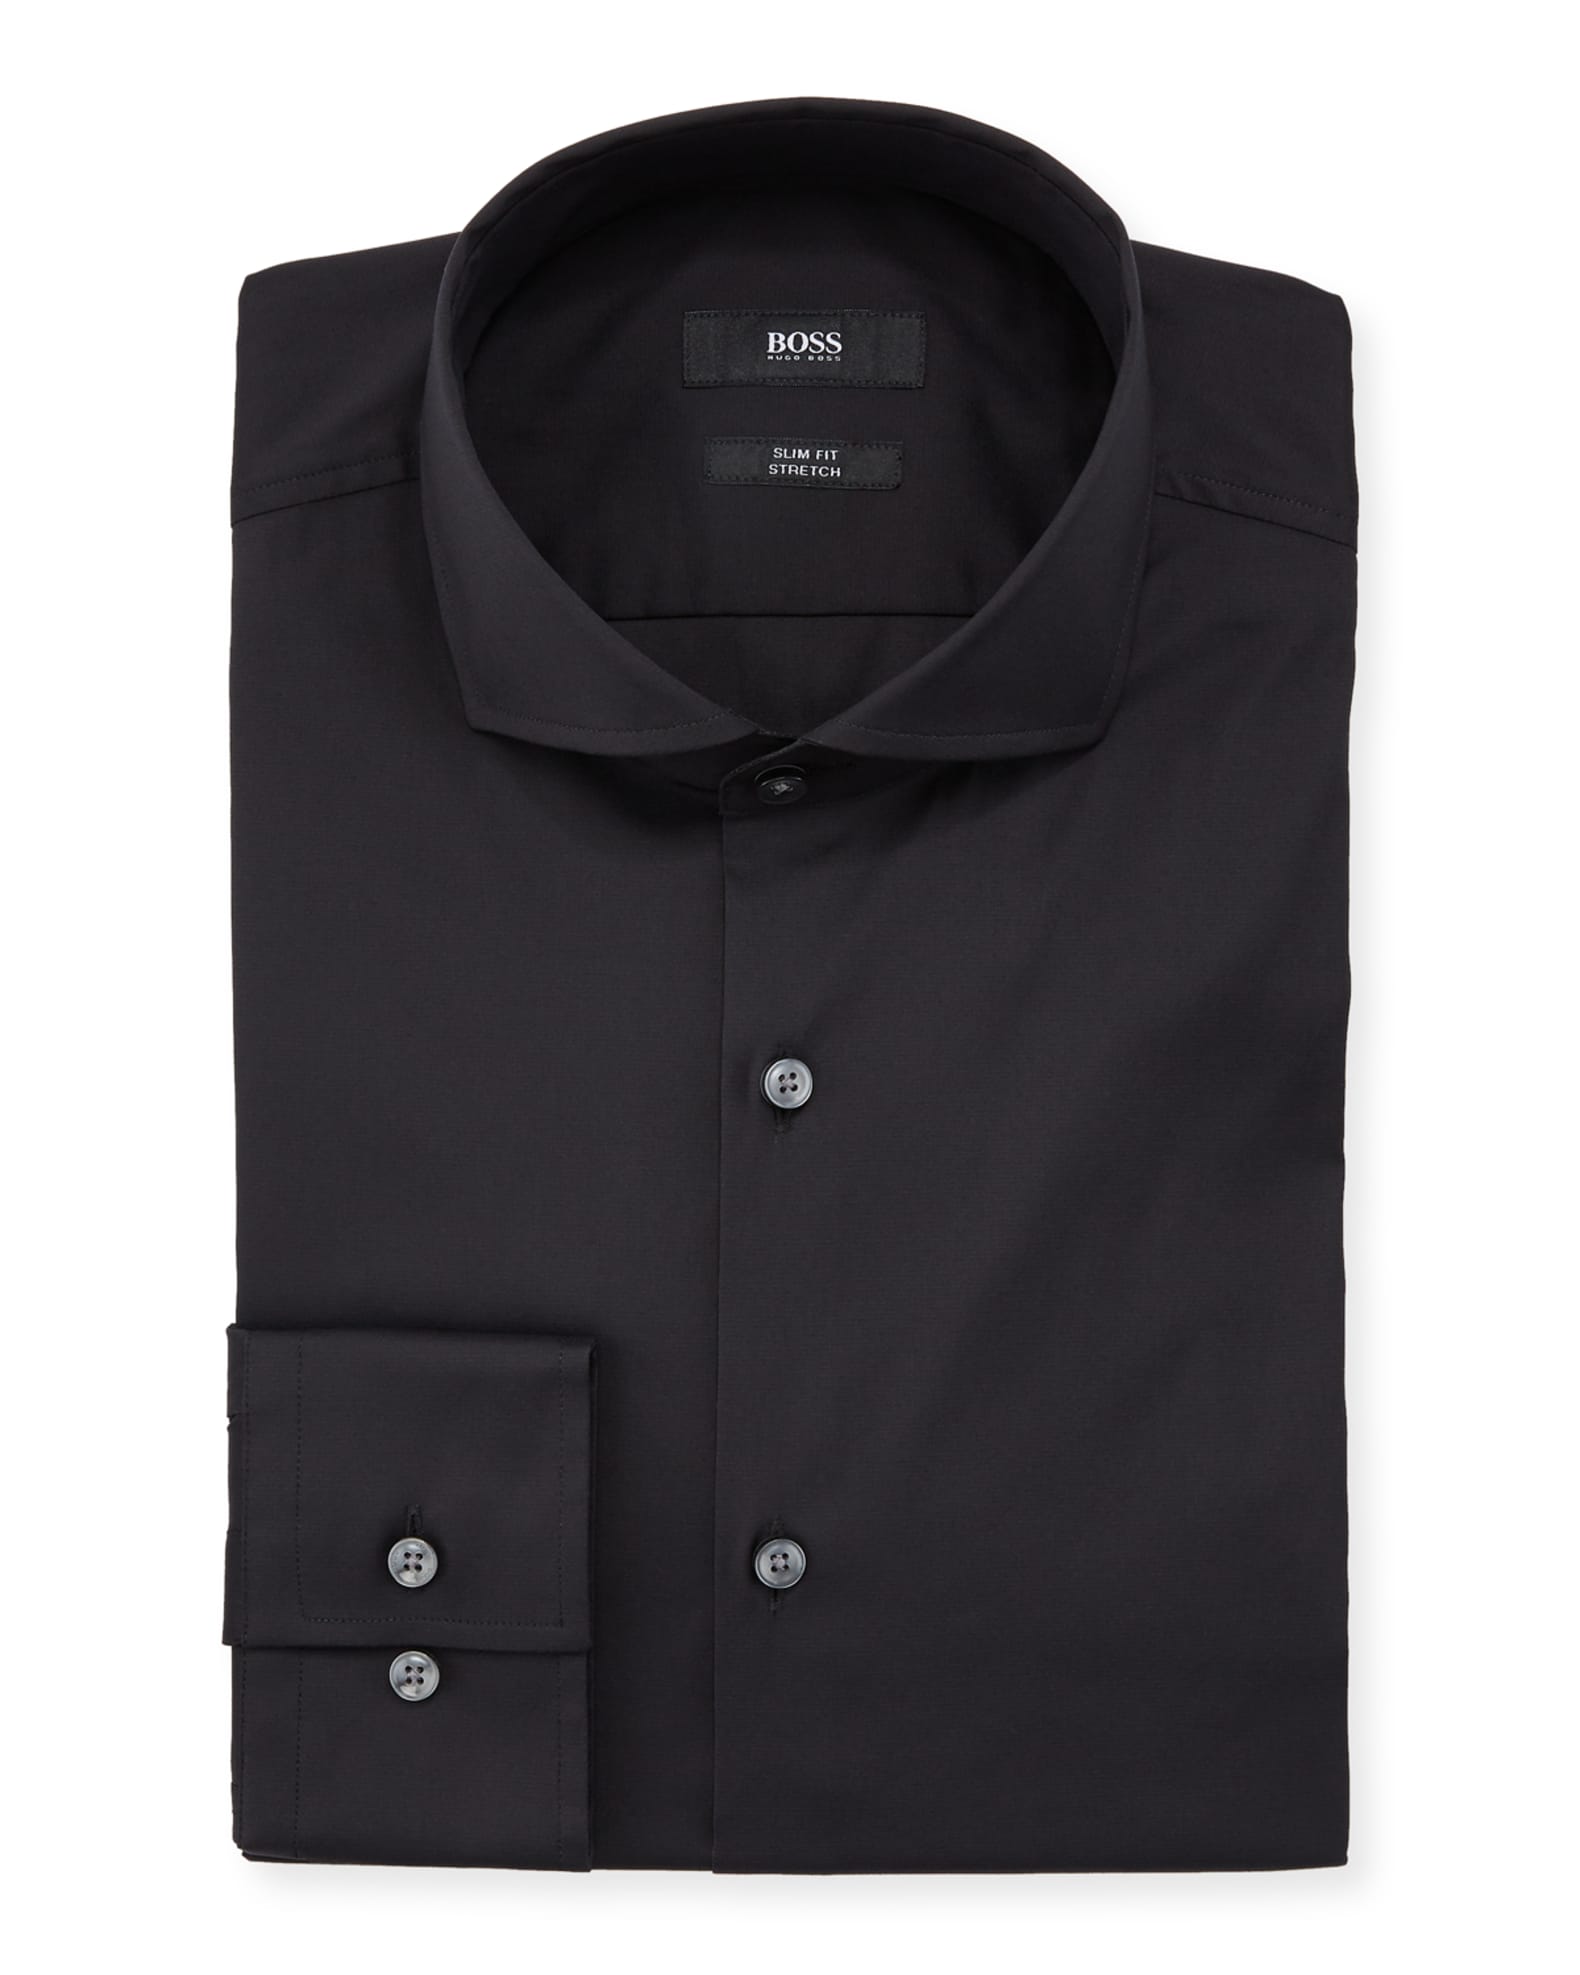 BOSS Slim Fit Stretch Solid Cotton Dress Shirt | Neiman Marcus